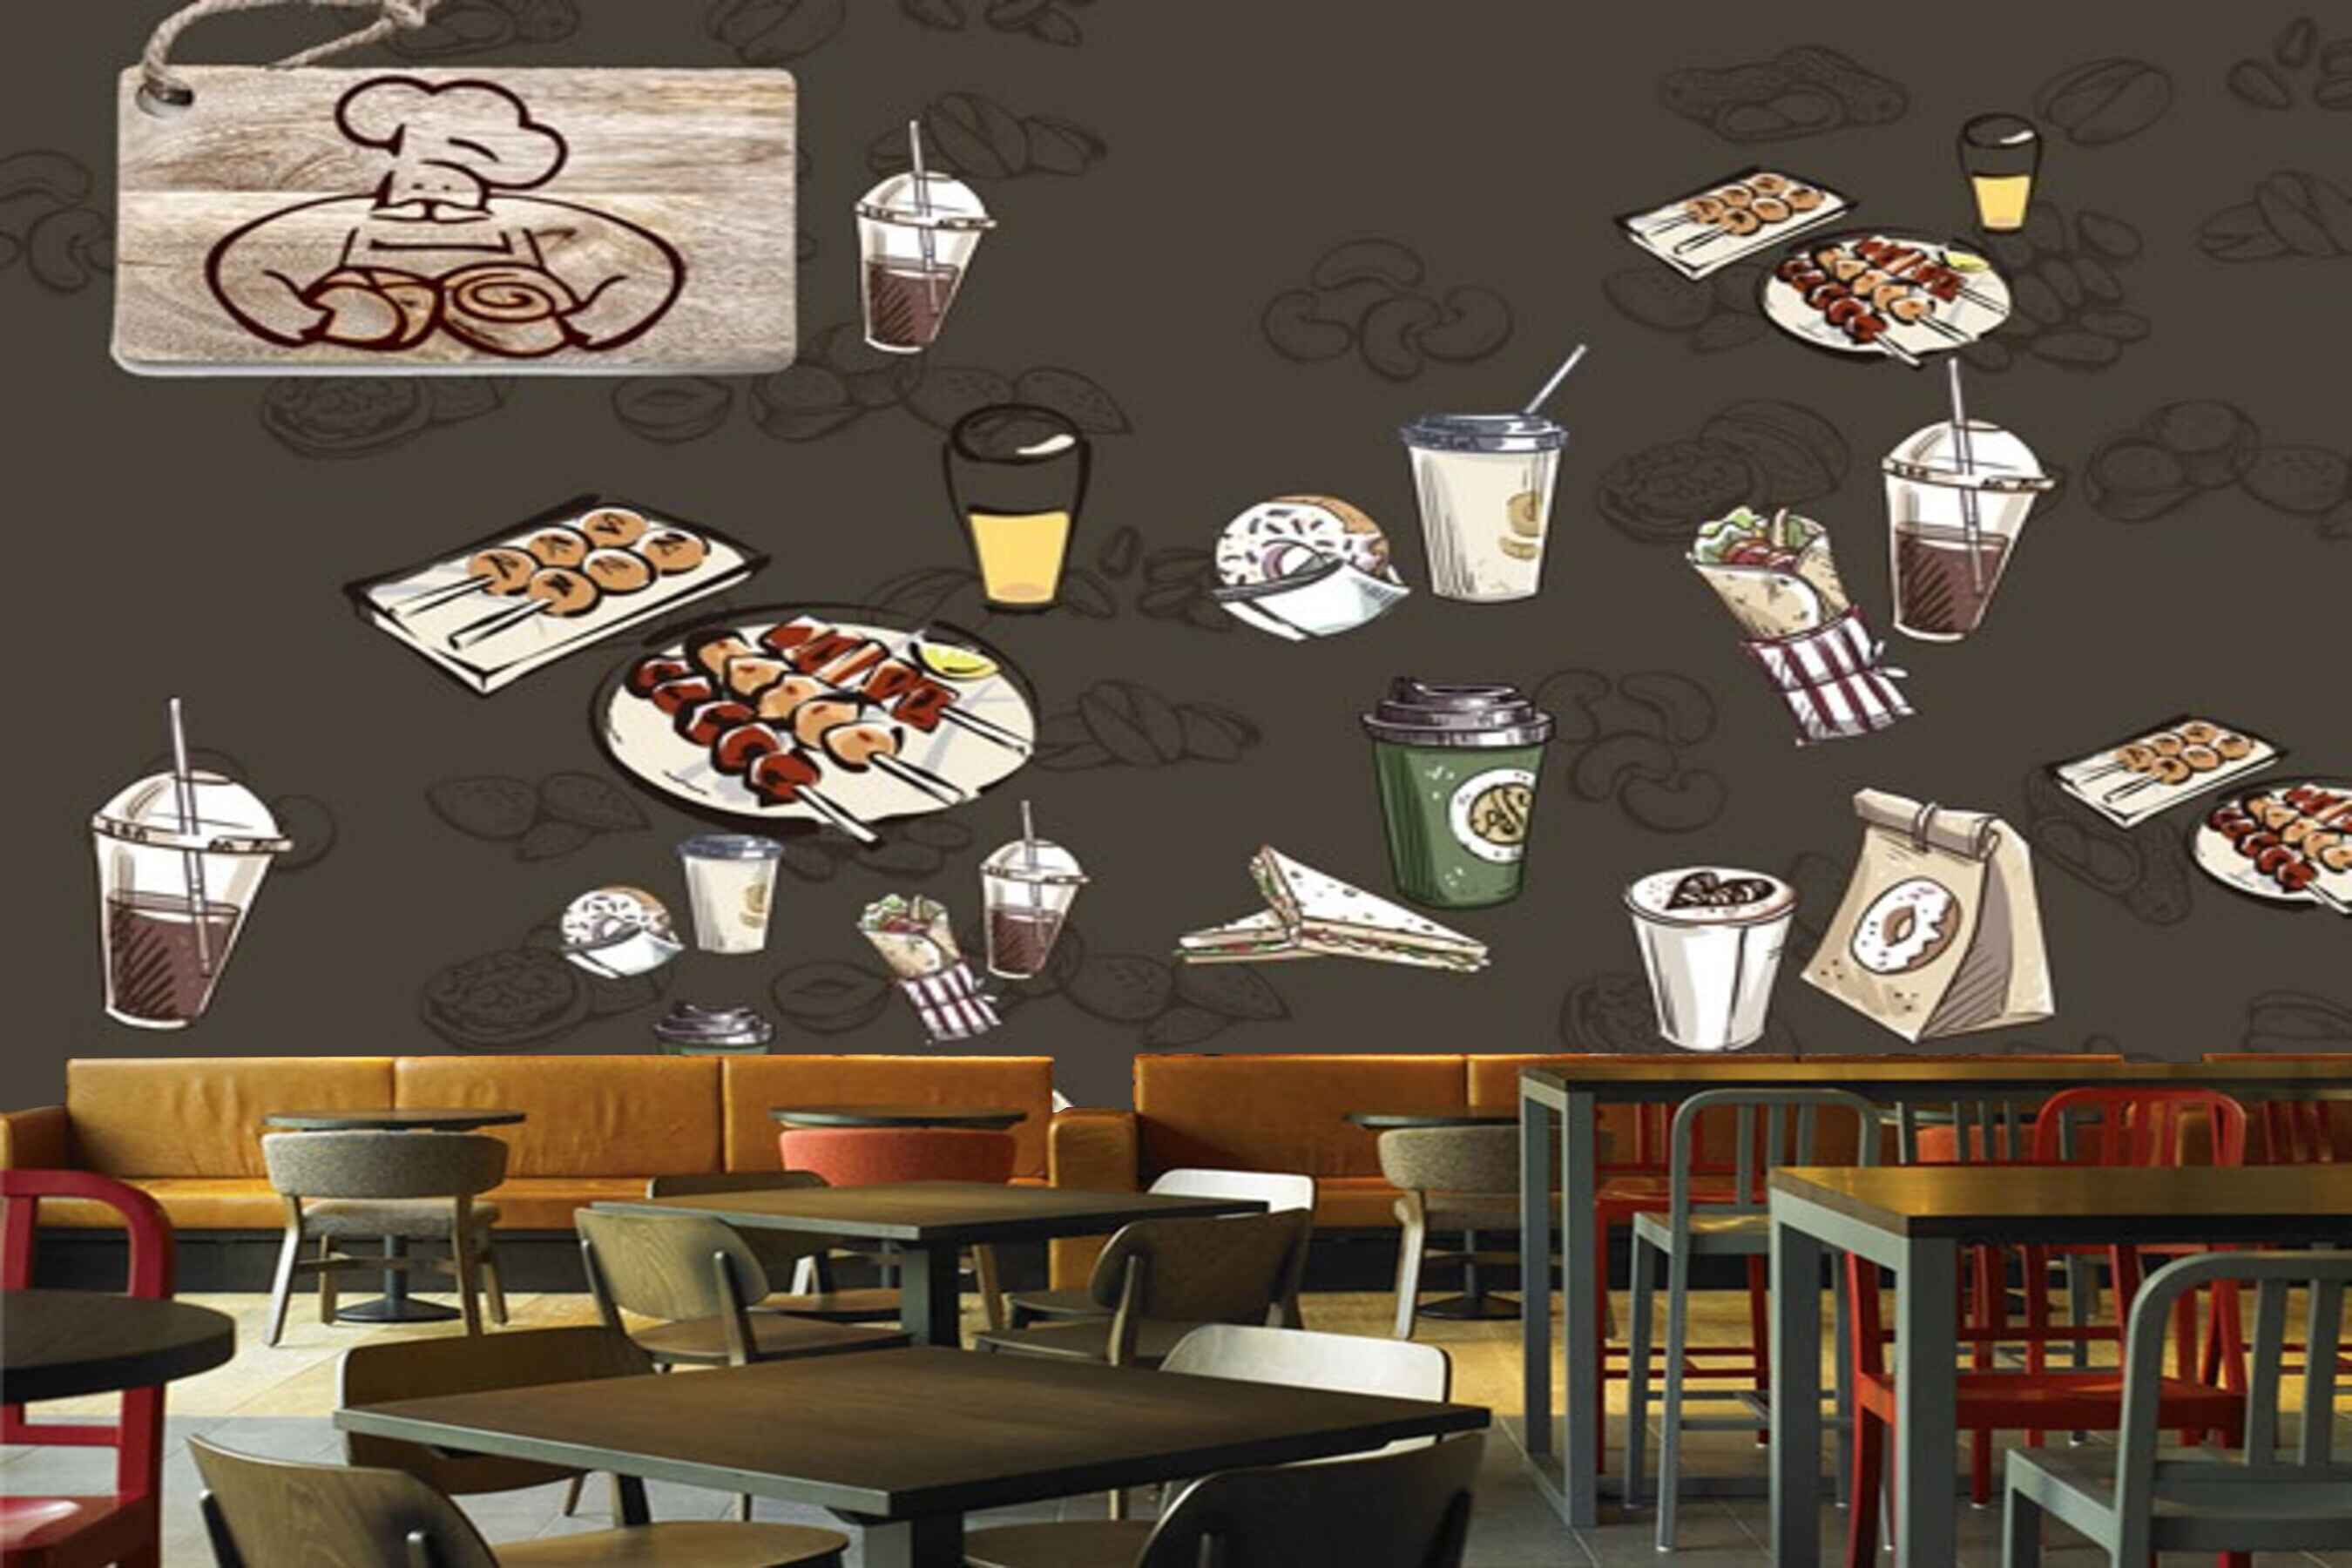 Avikalp MWZ3023 Milkshakes Sandwich Chicken HD Wallpaper for Cafe Restaurant